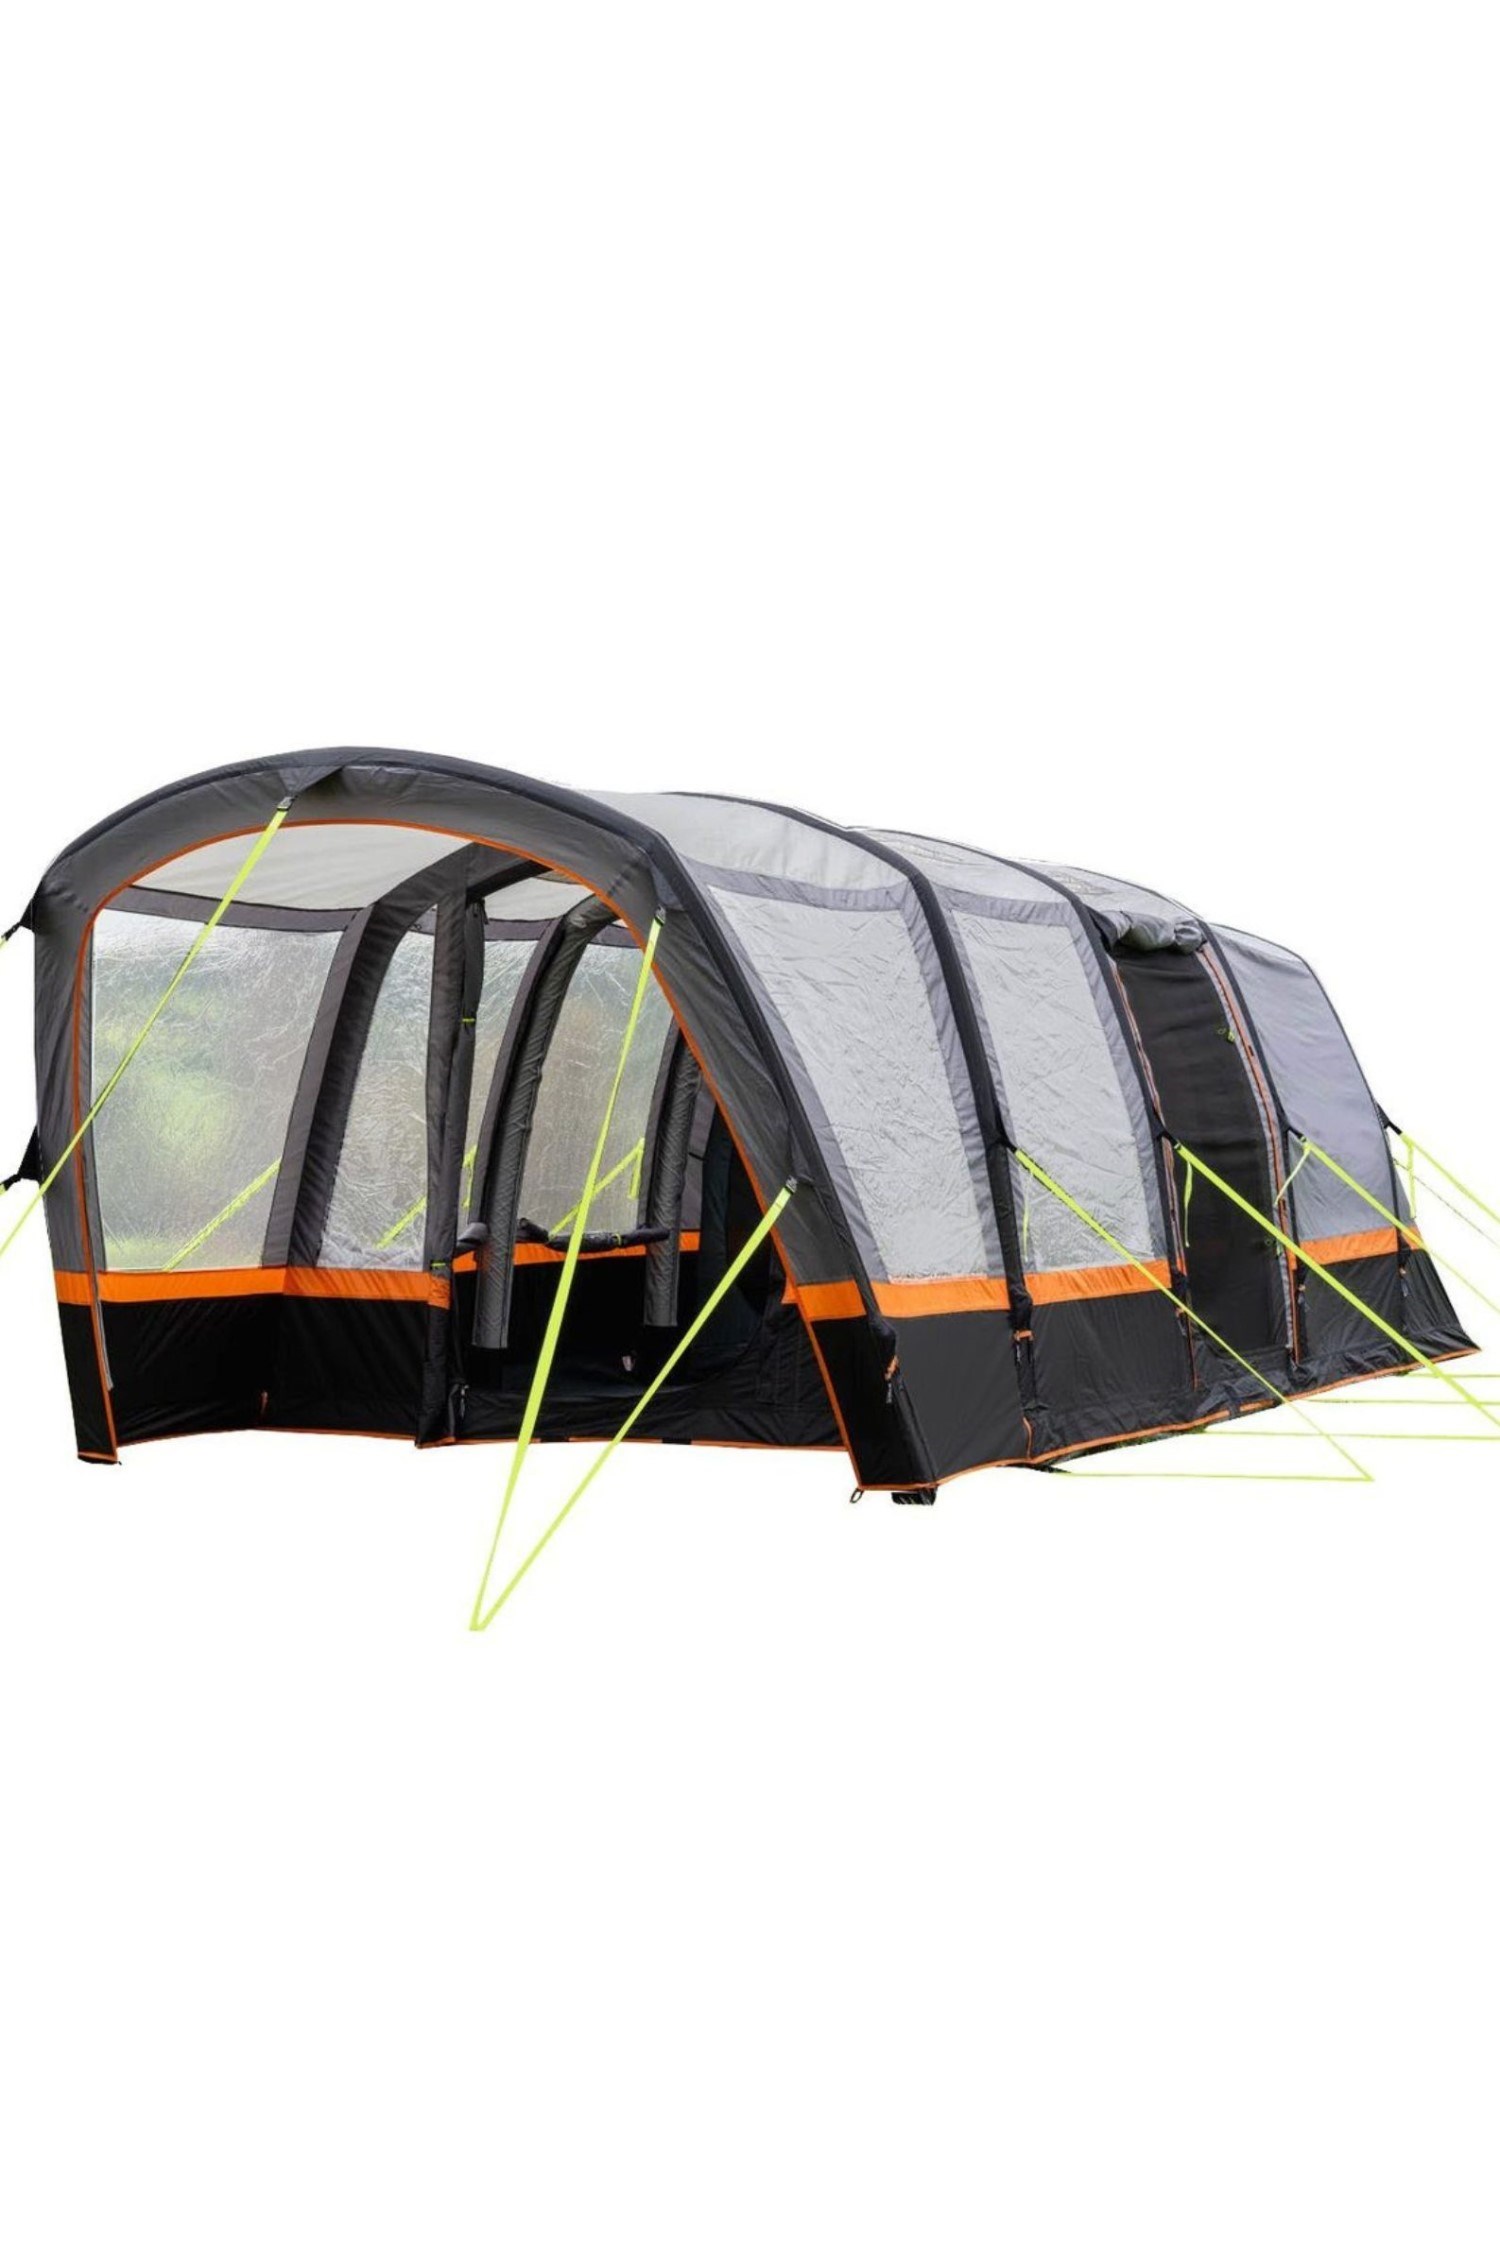 Blakedown Breeze 4 Berth Inflatable Tent -